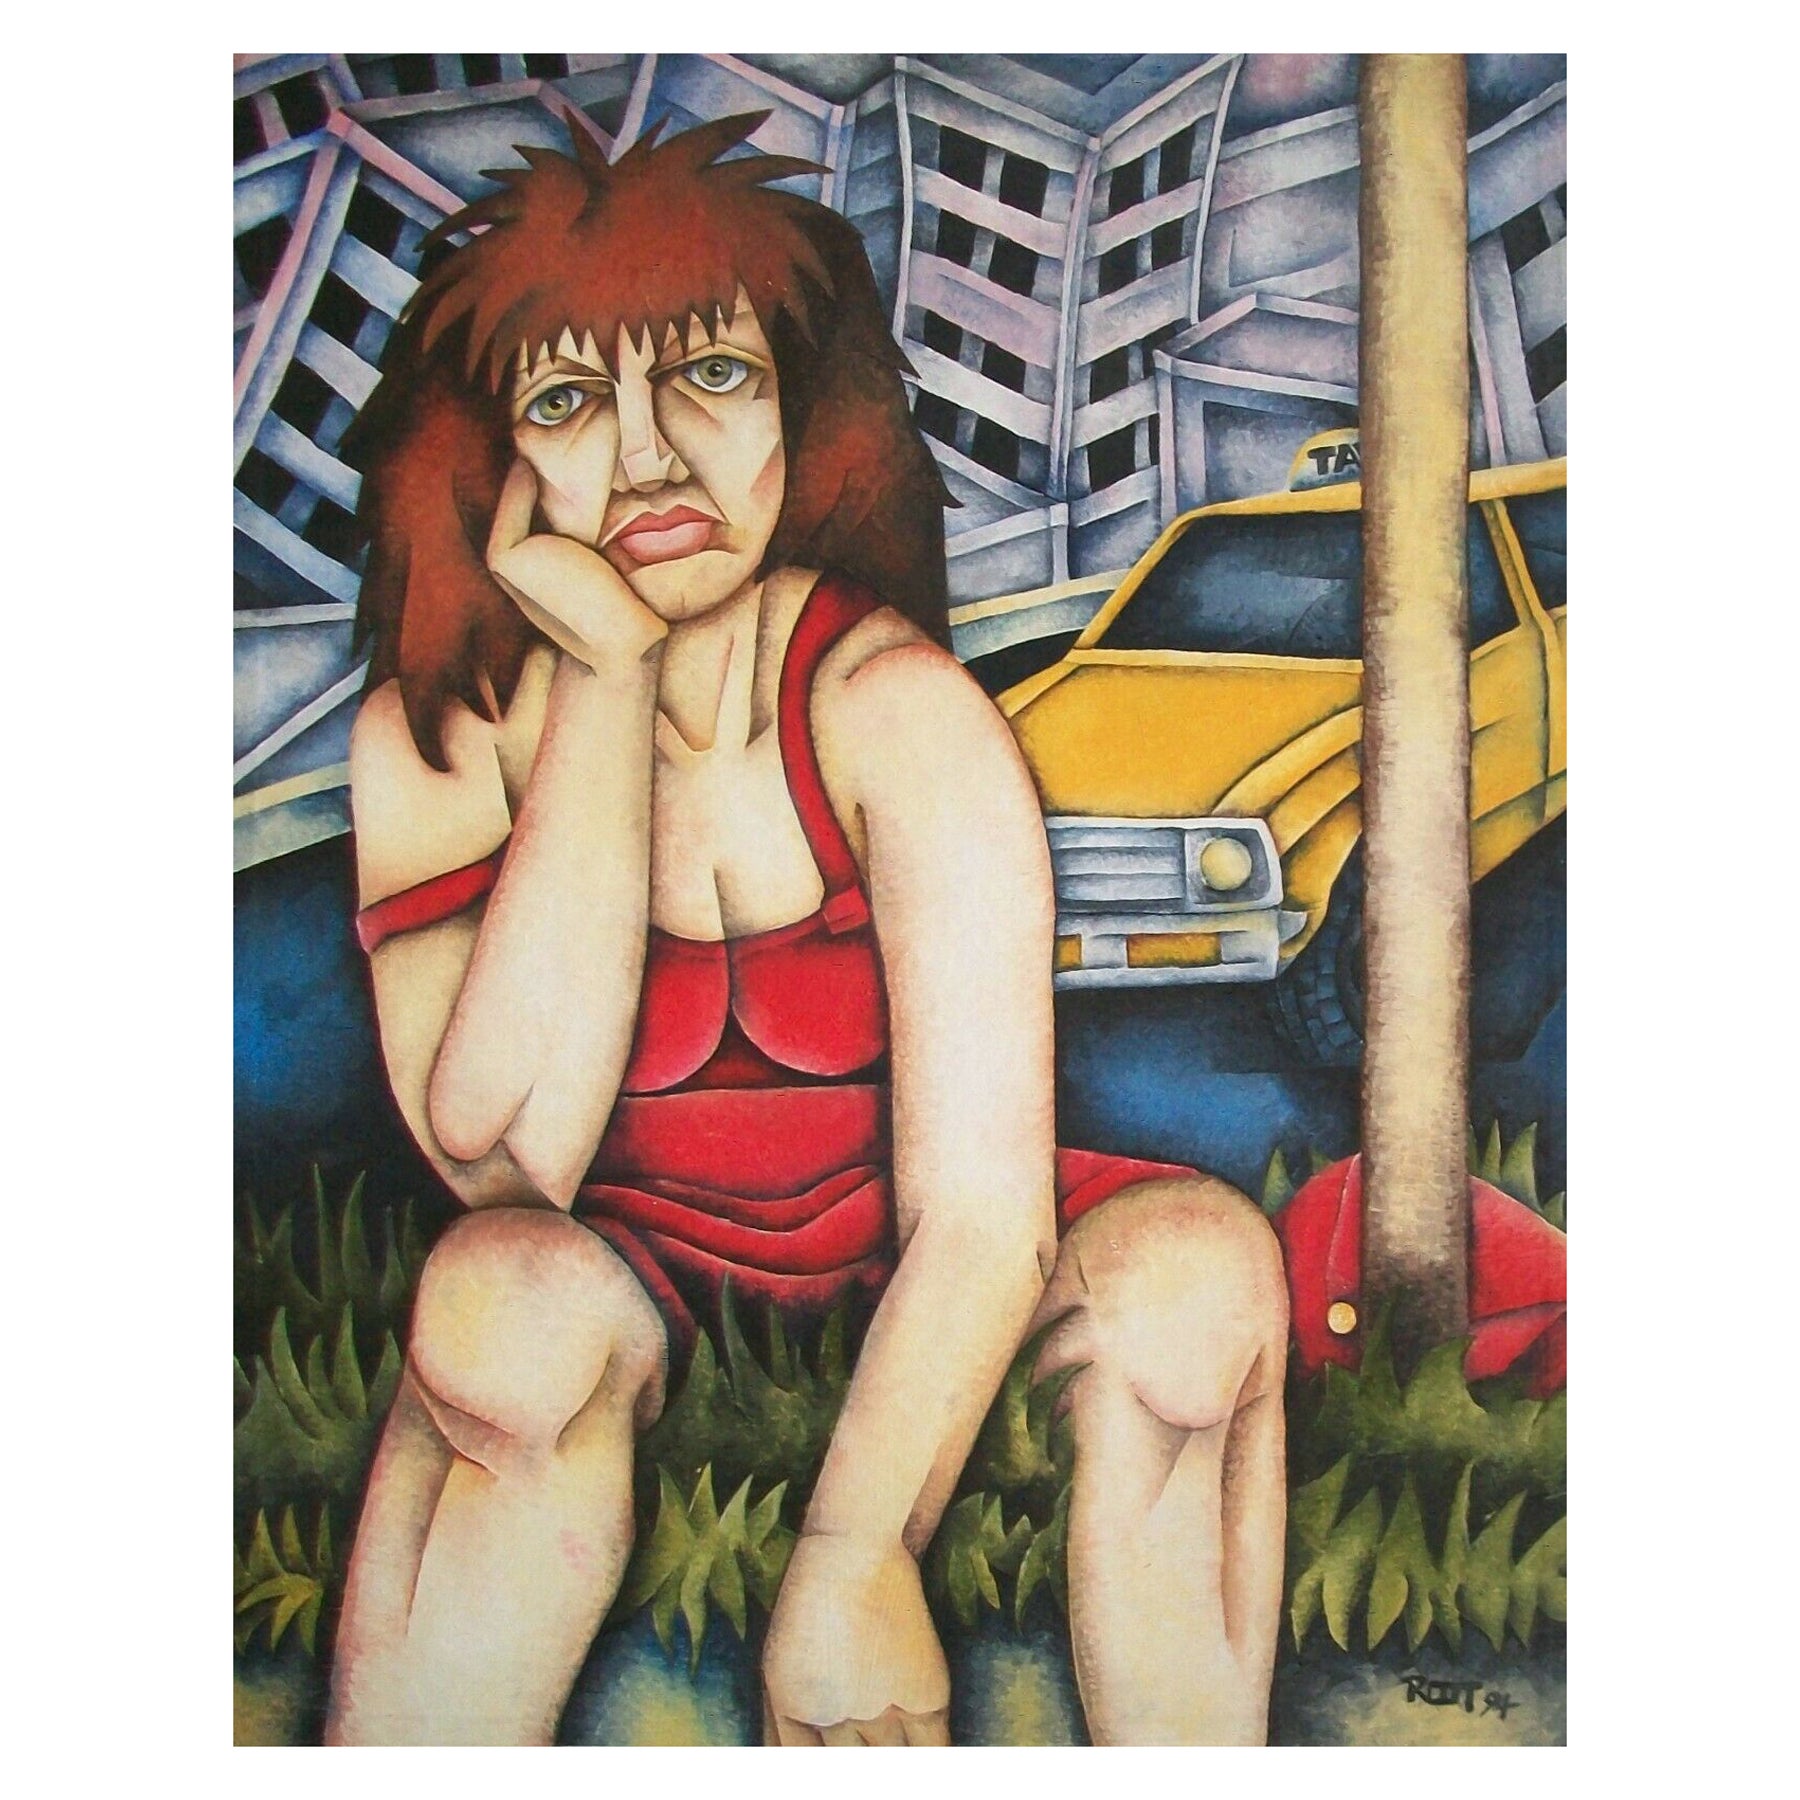 Tracy Roots, "Working Class", peinture acrylique encadrée, Canada, vers 1994